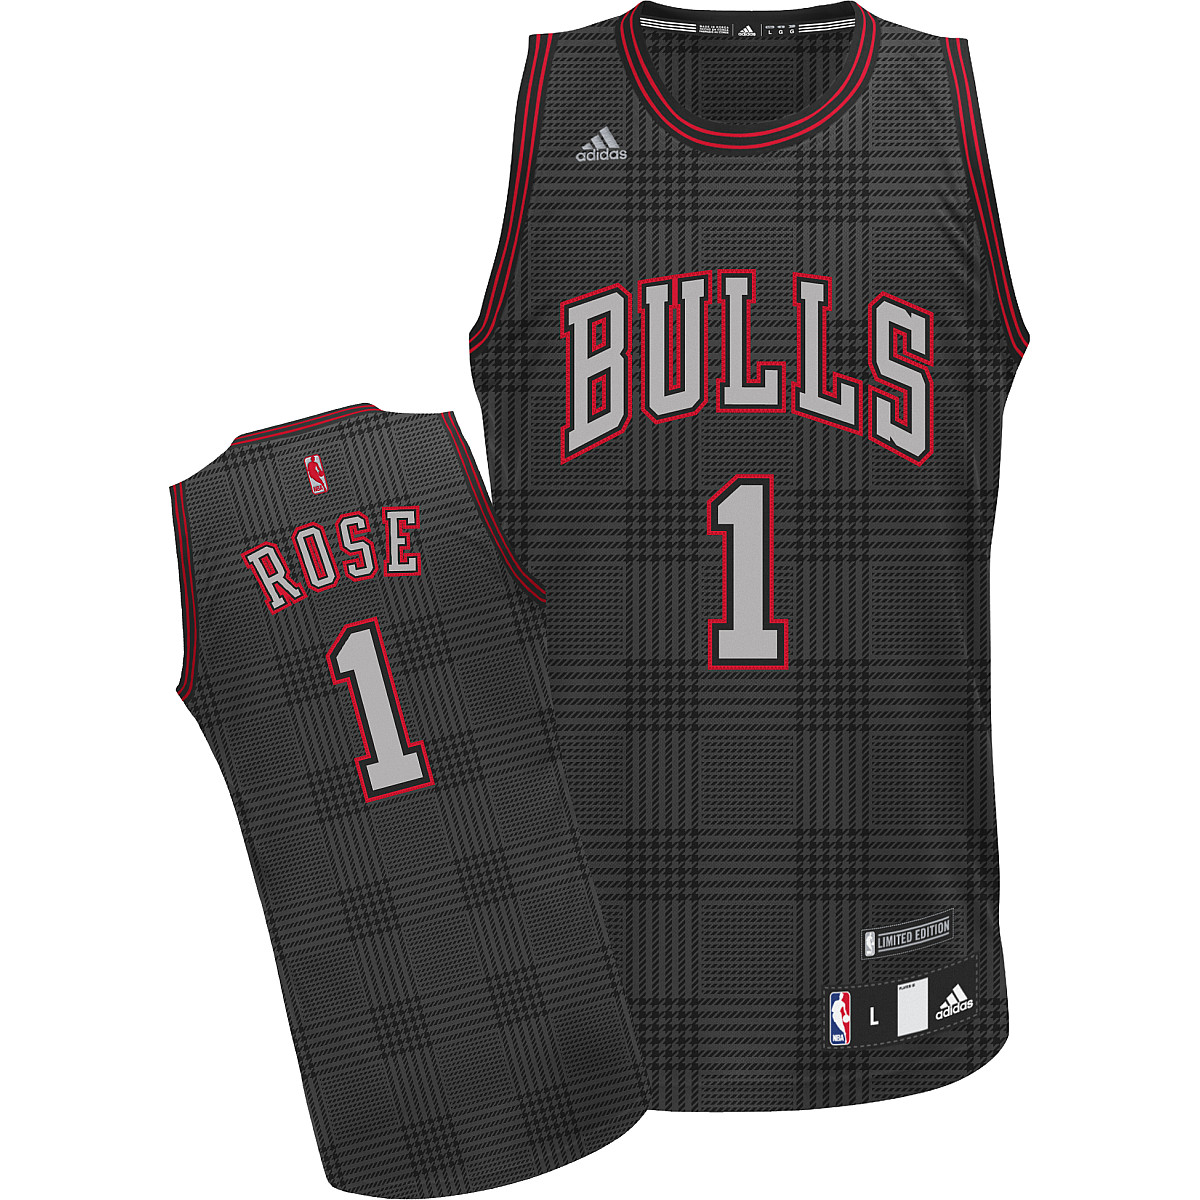 Bulls 1 Rose Grey Jerseys